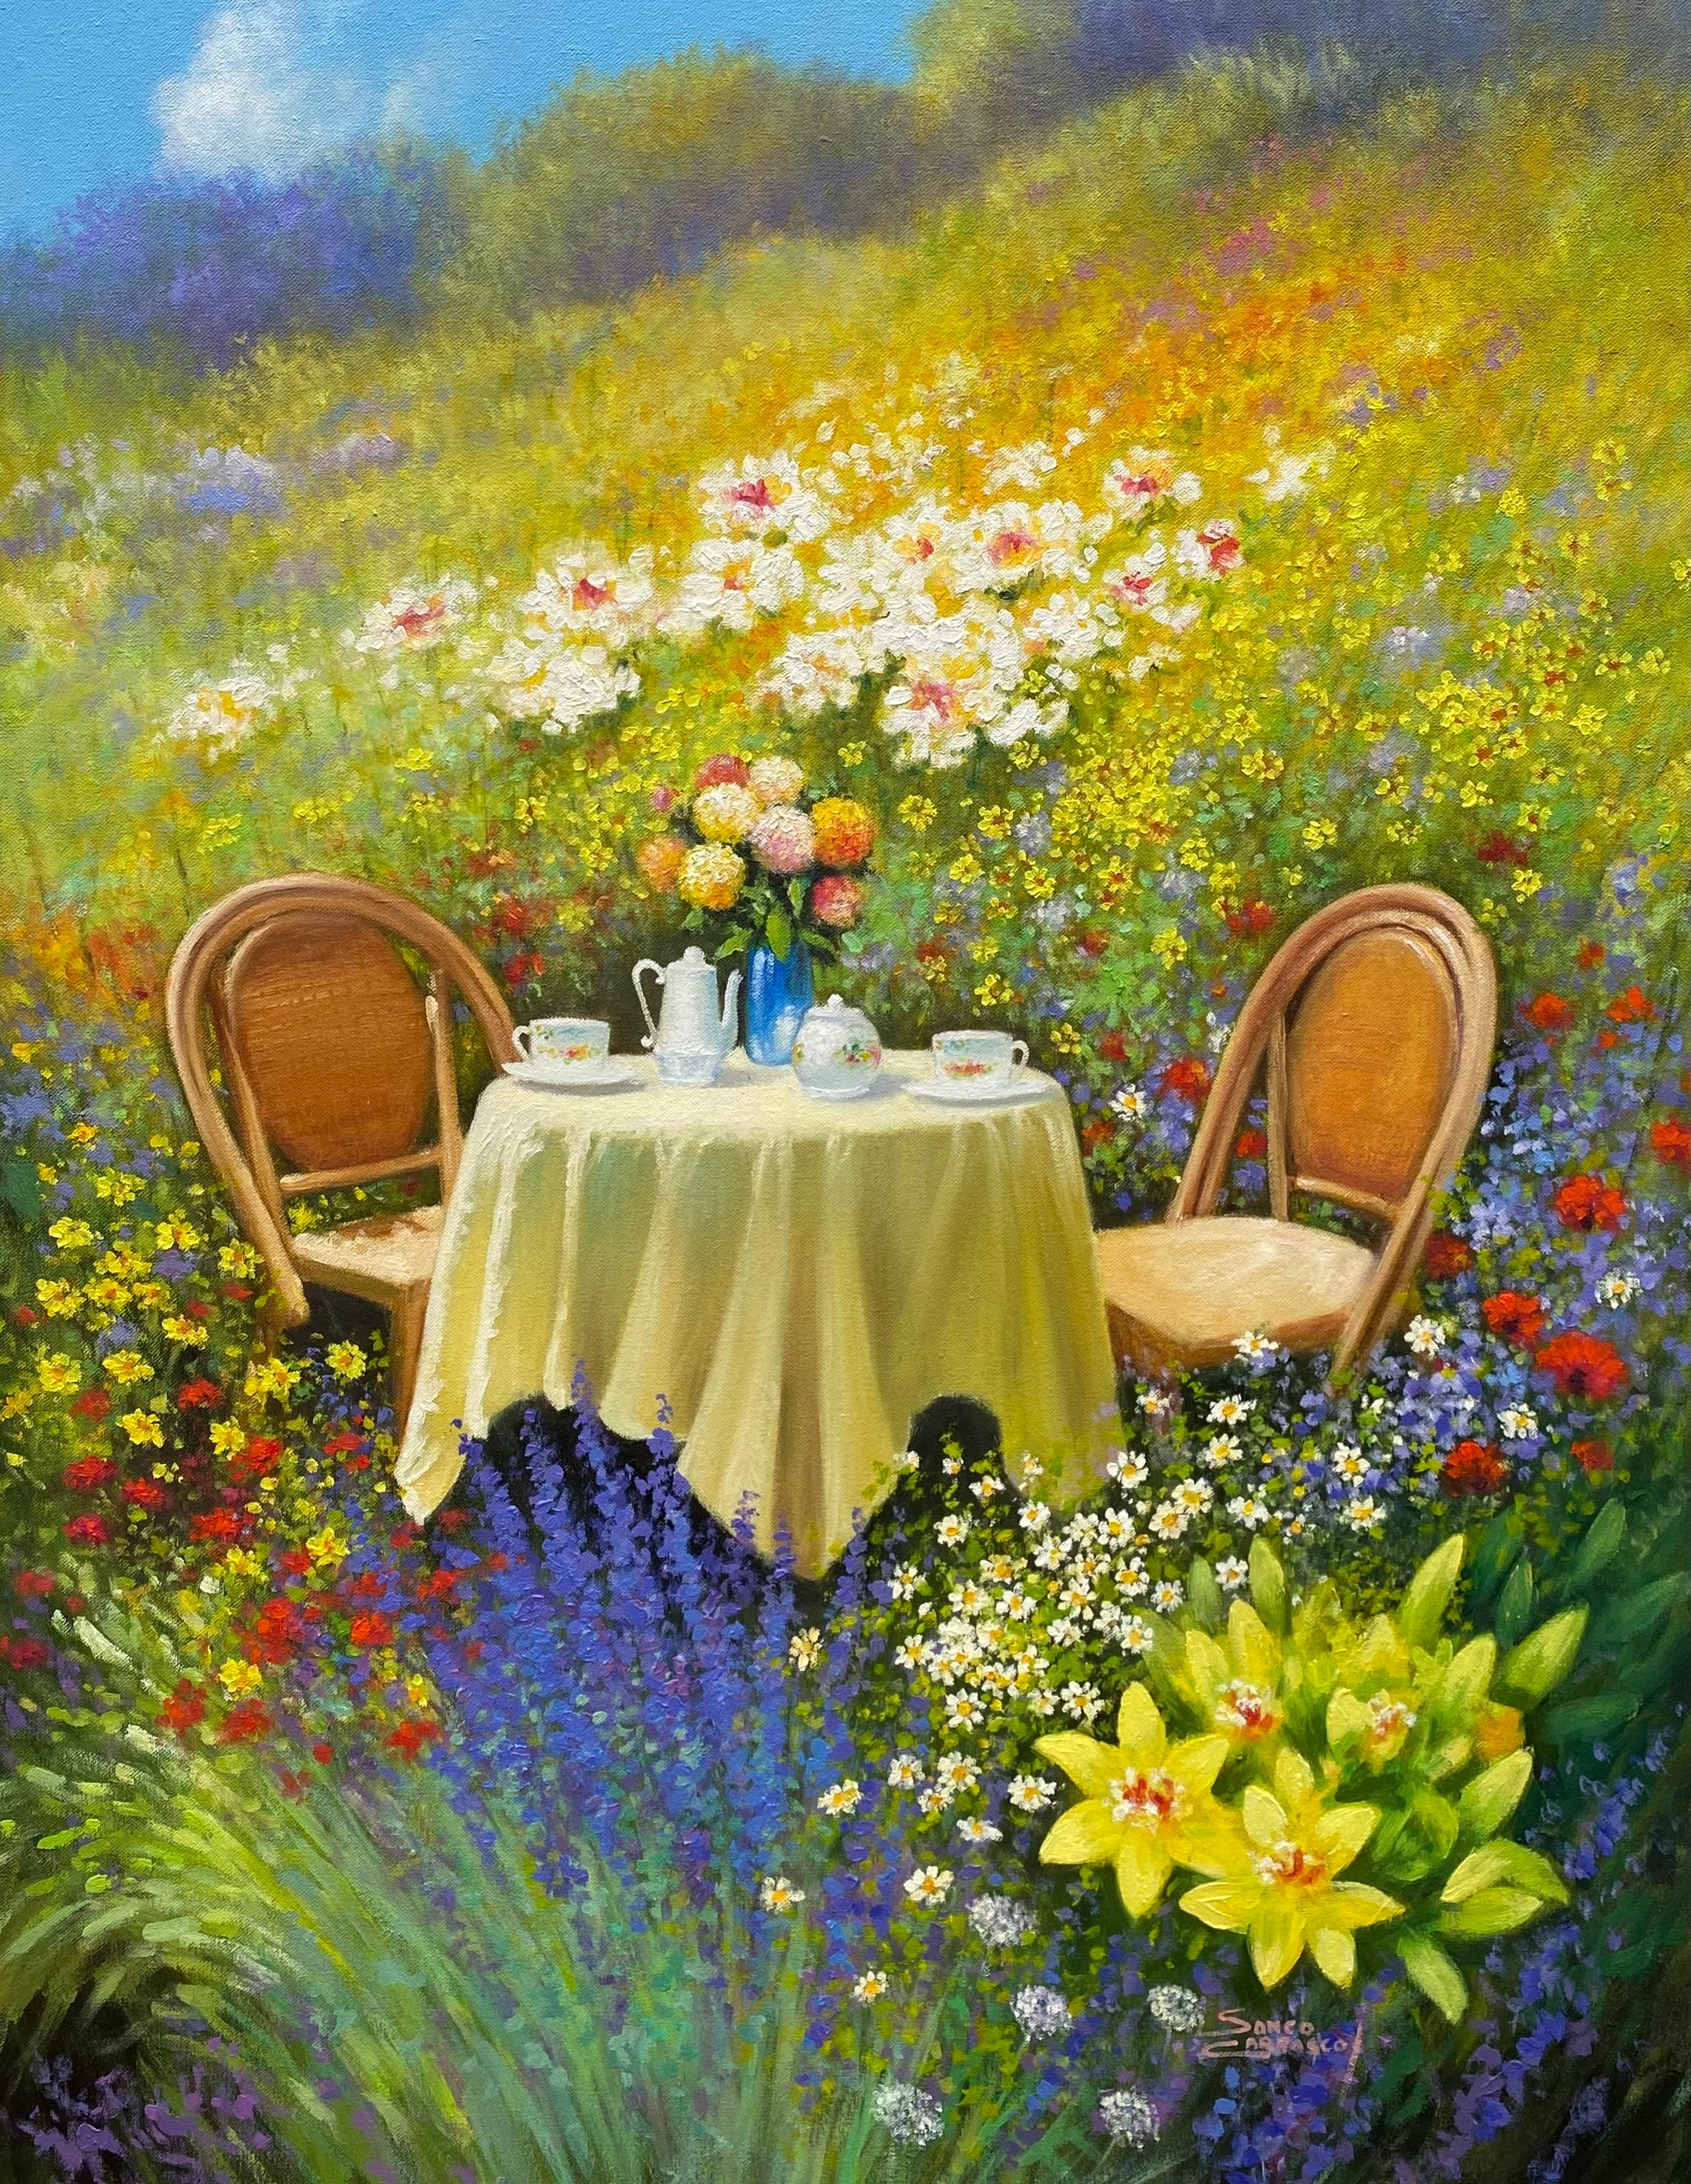 Sonco Carrasco Landscape Painting - Tea Time-original impressionism floral landscape-still life oil painting-artwork